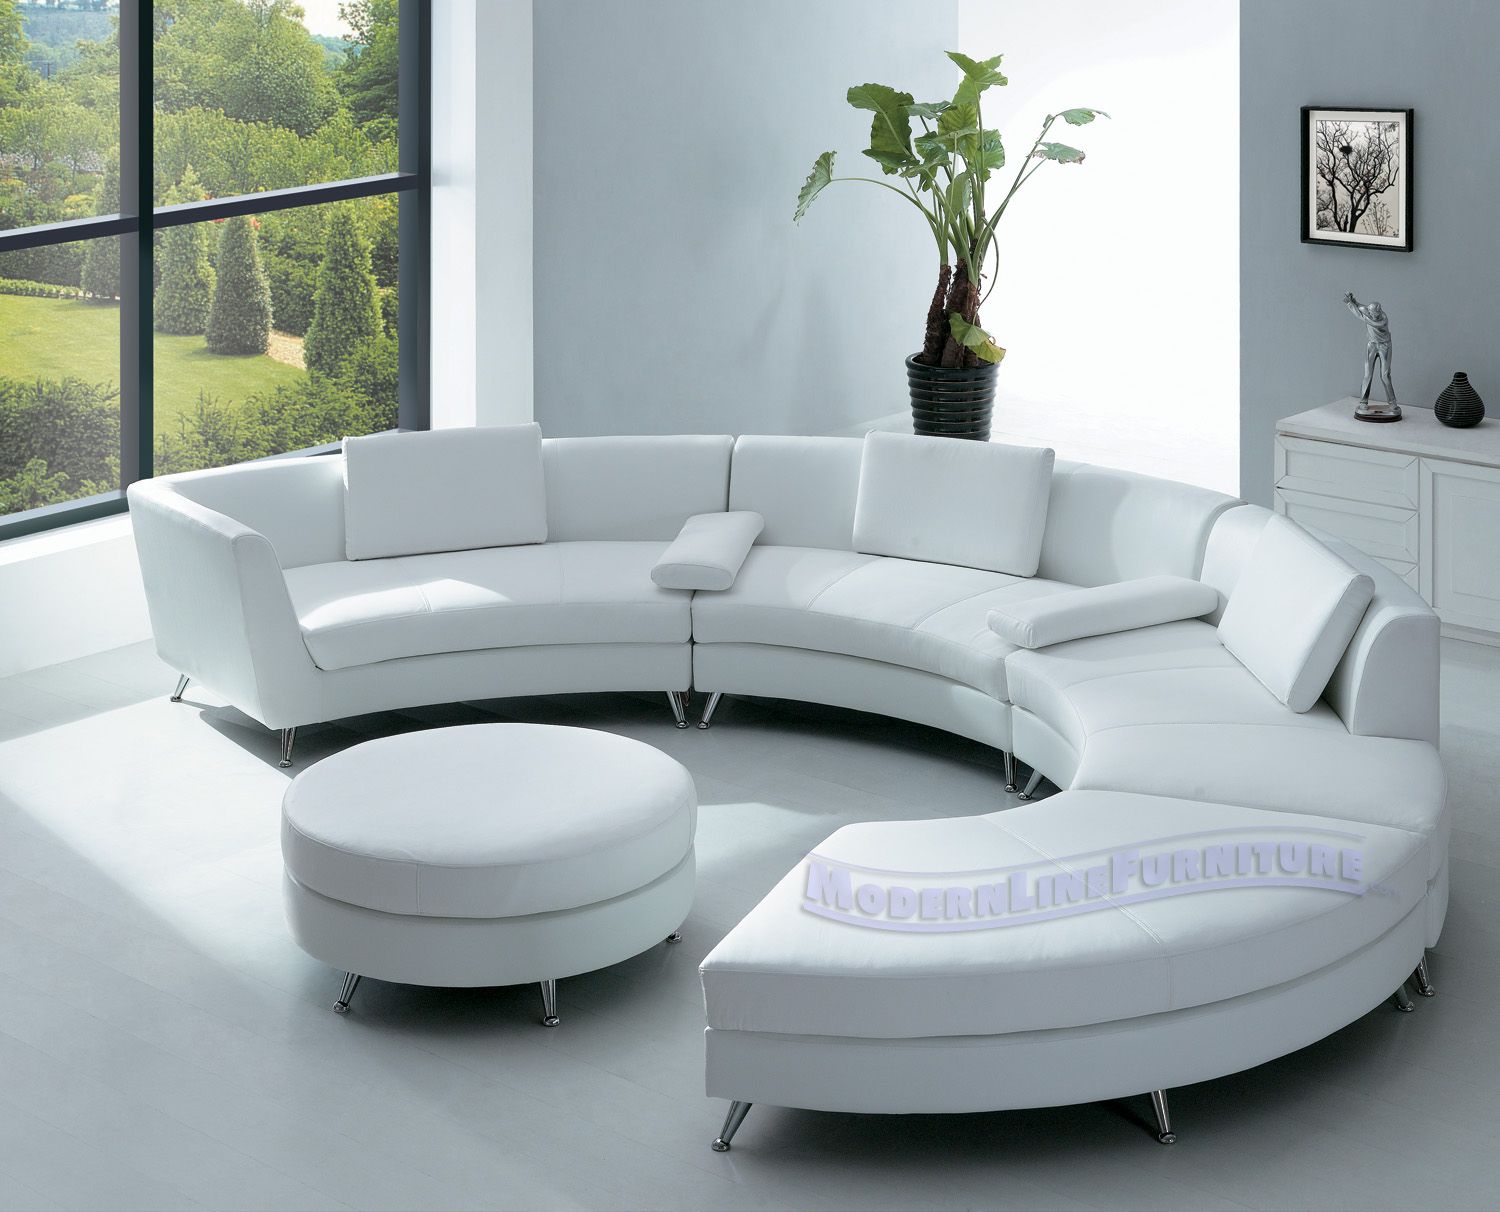 Contemporary Sofas for Home Interior room furniture with elegant half circle sofa home interior designs MZXSVPQ